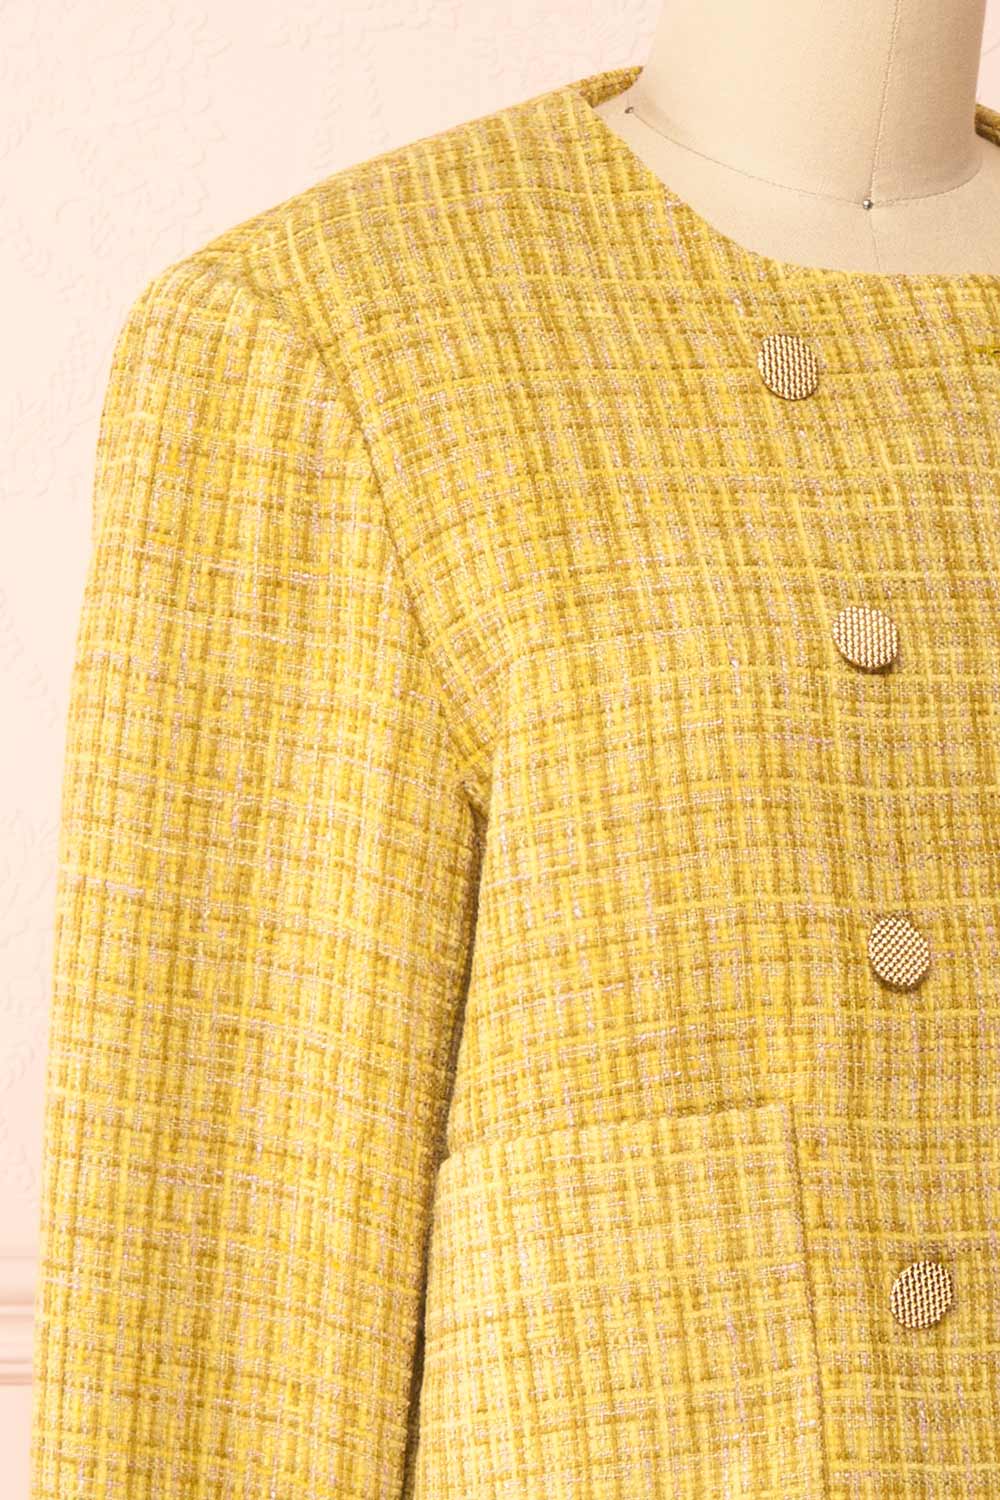 St. John Collection Taupe/Turquoise Tweed Jacket sz 8